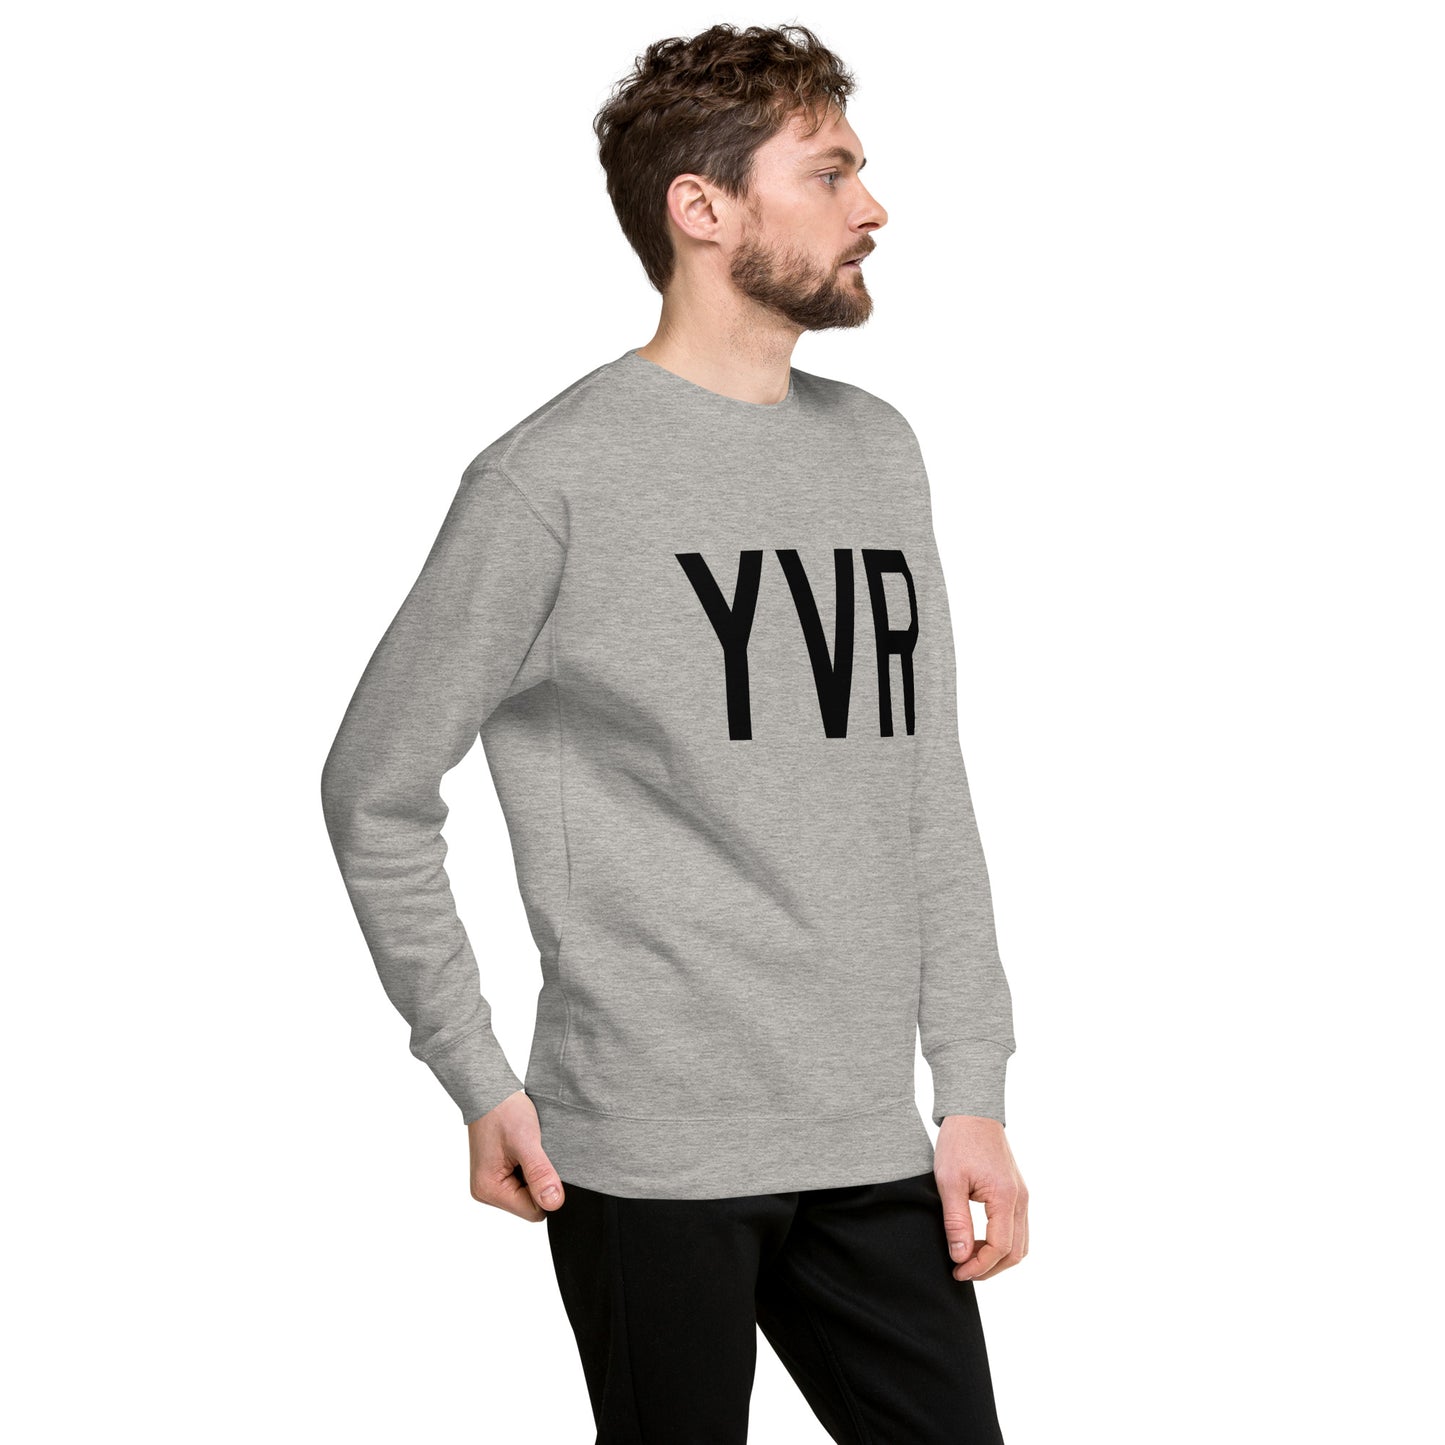 YVR Vancouver British Columbia Premium Sweatshirt